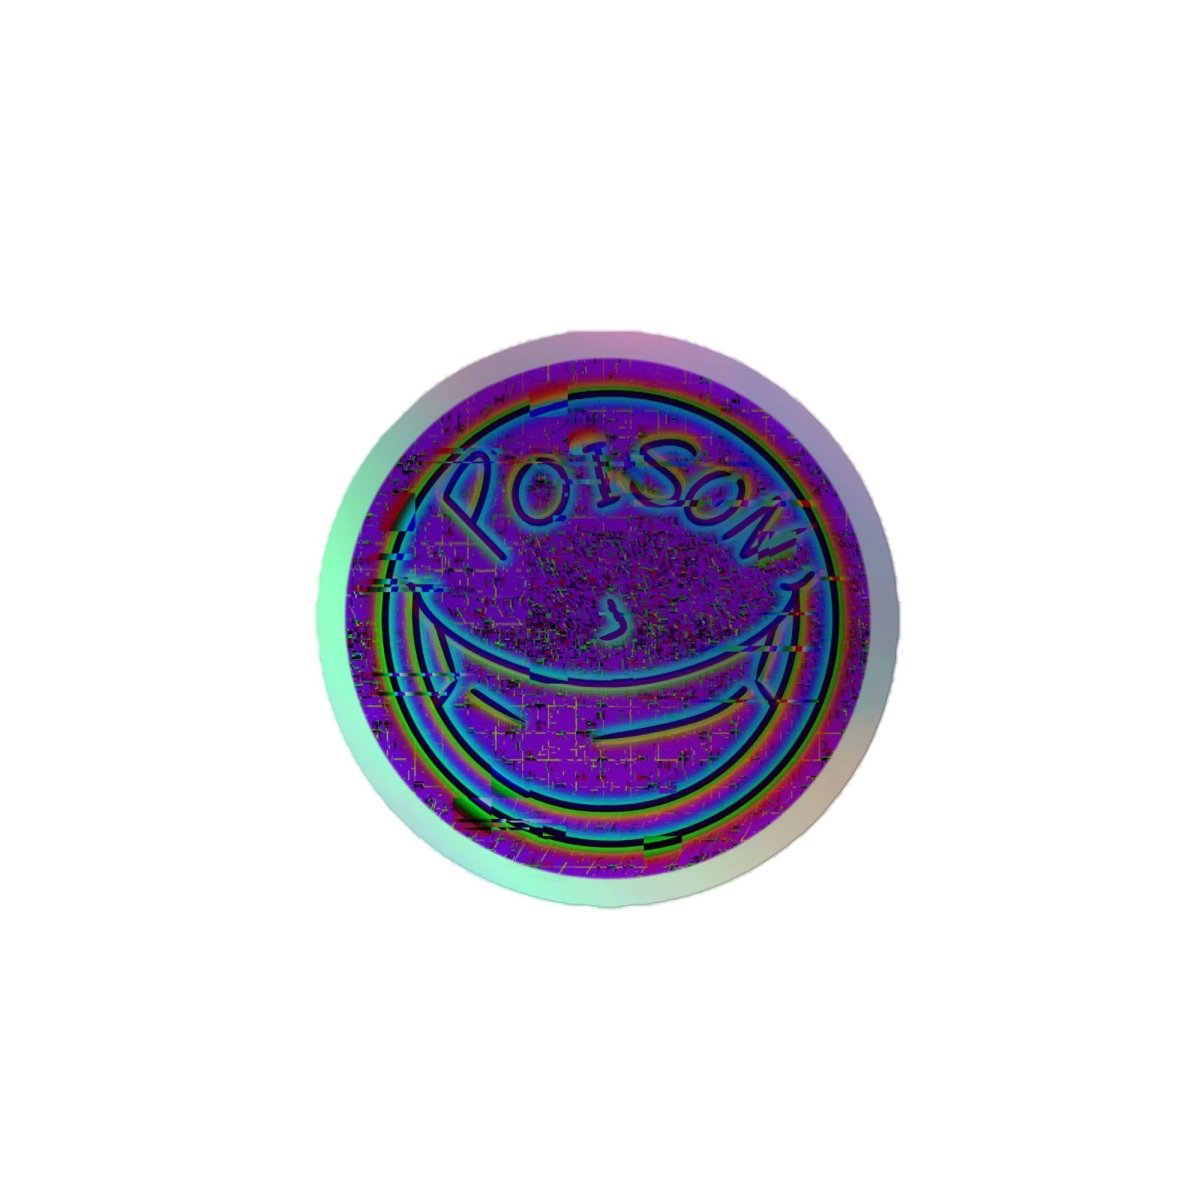 Poison Face Glitch // Holographic sticker - Maux Zachintosh